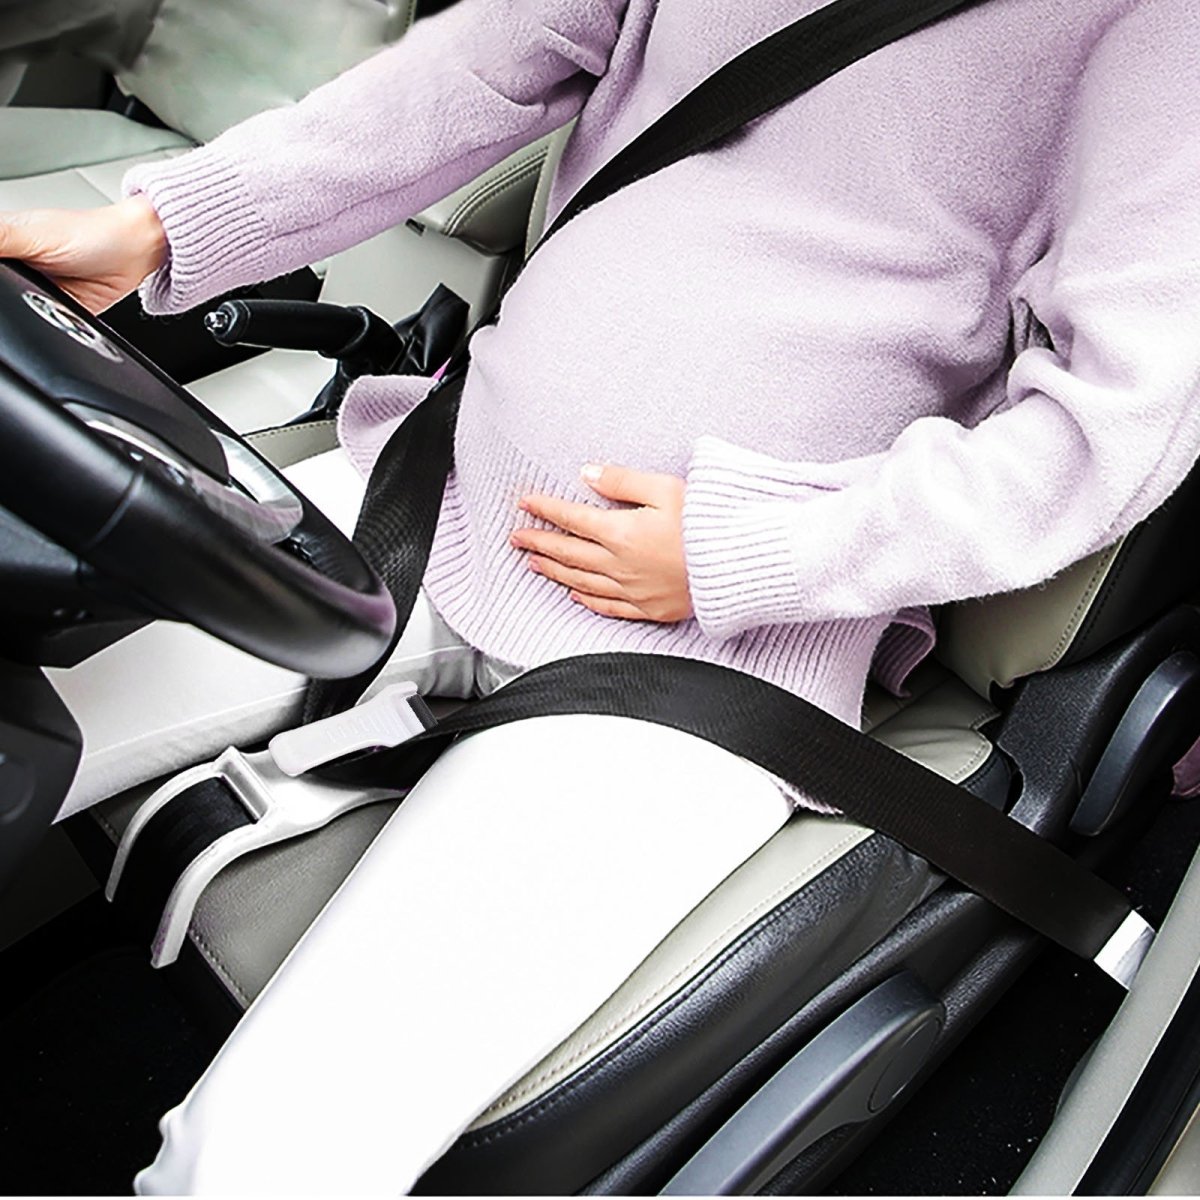 Pregnancy Safety Belt – MimiBelt